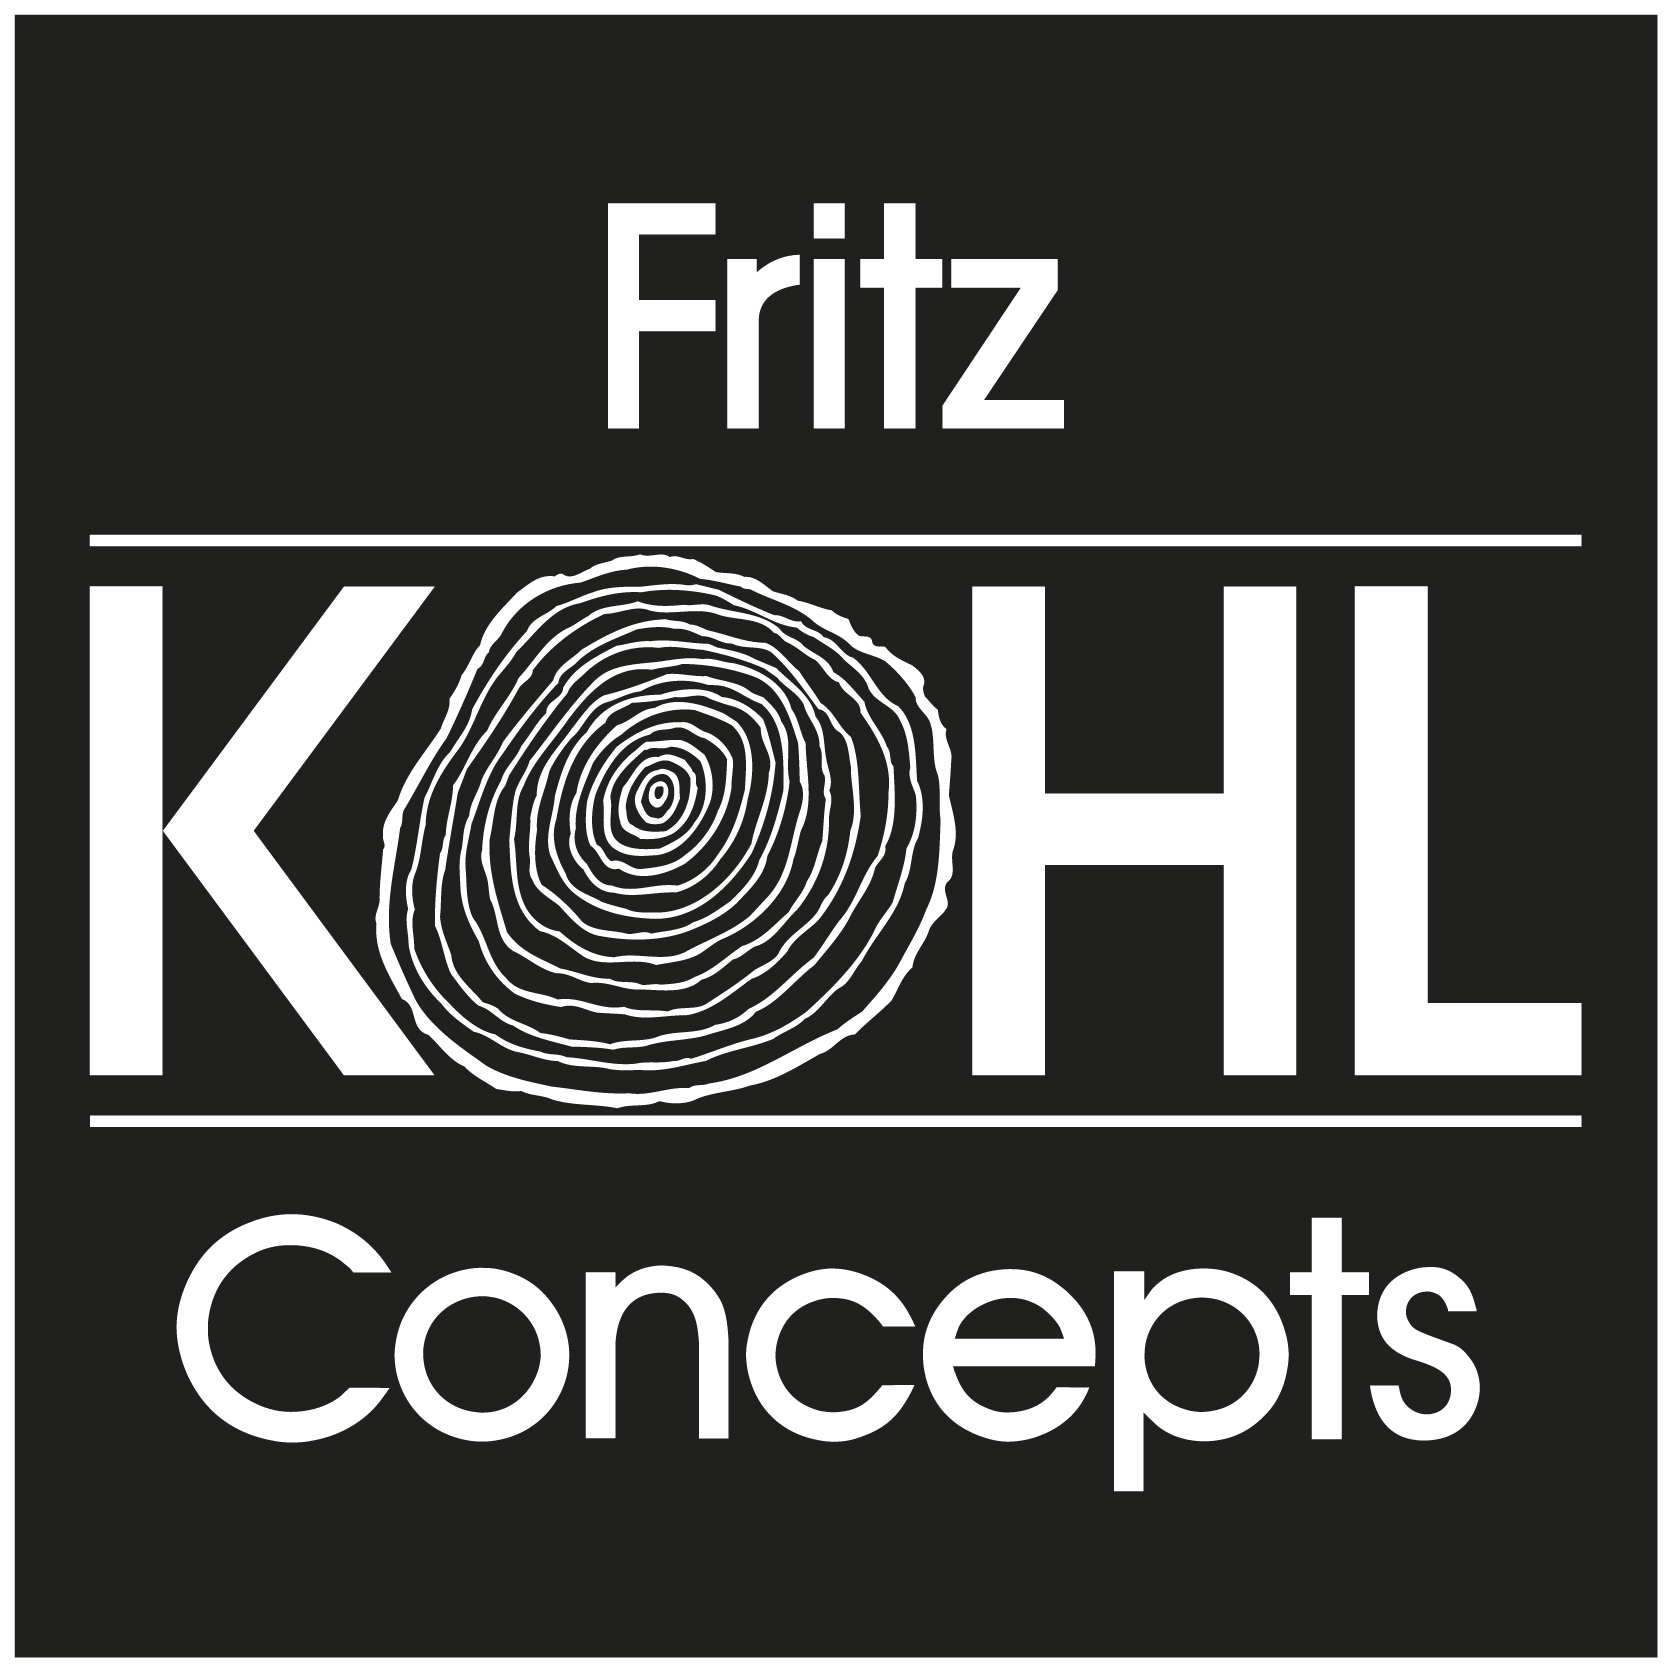 Fritz Kohl Concepts GmbH & Co. KG